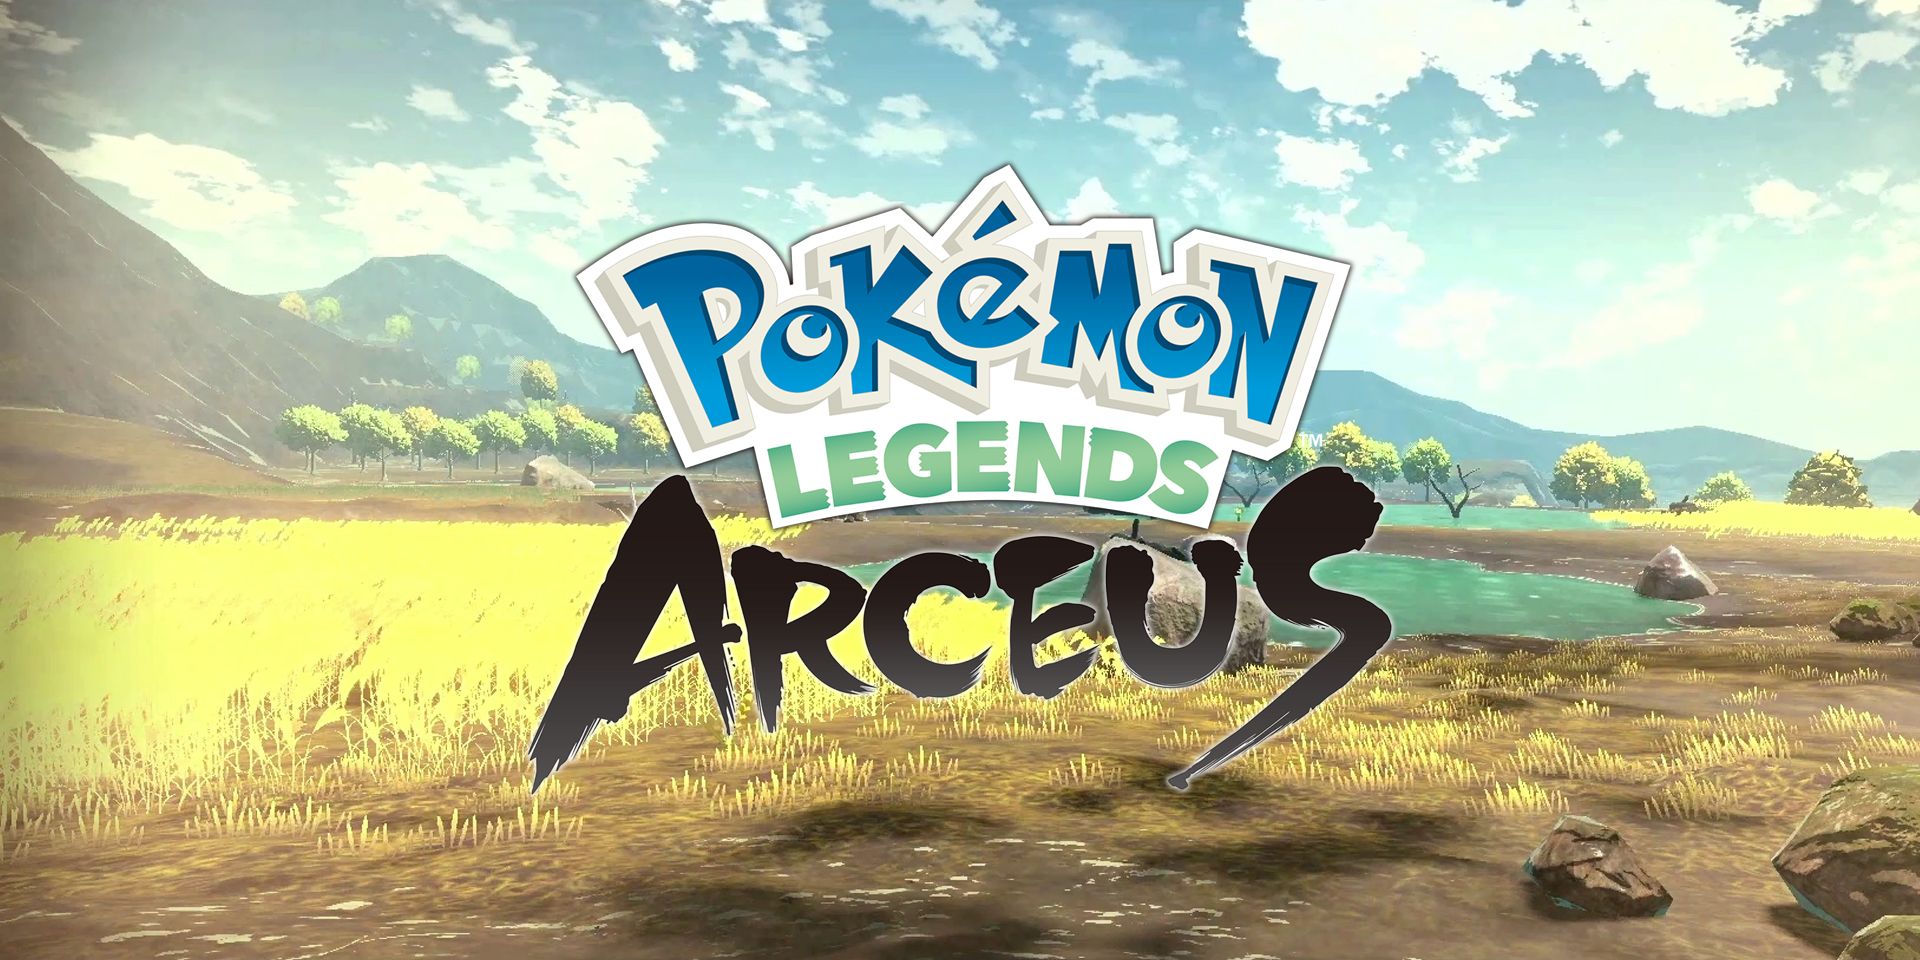 Pokemon Legends Arceus Pokedex: Full list of Pokemon